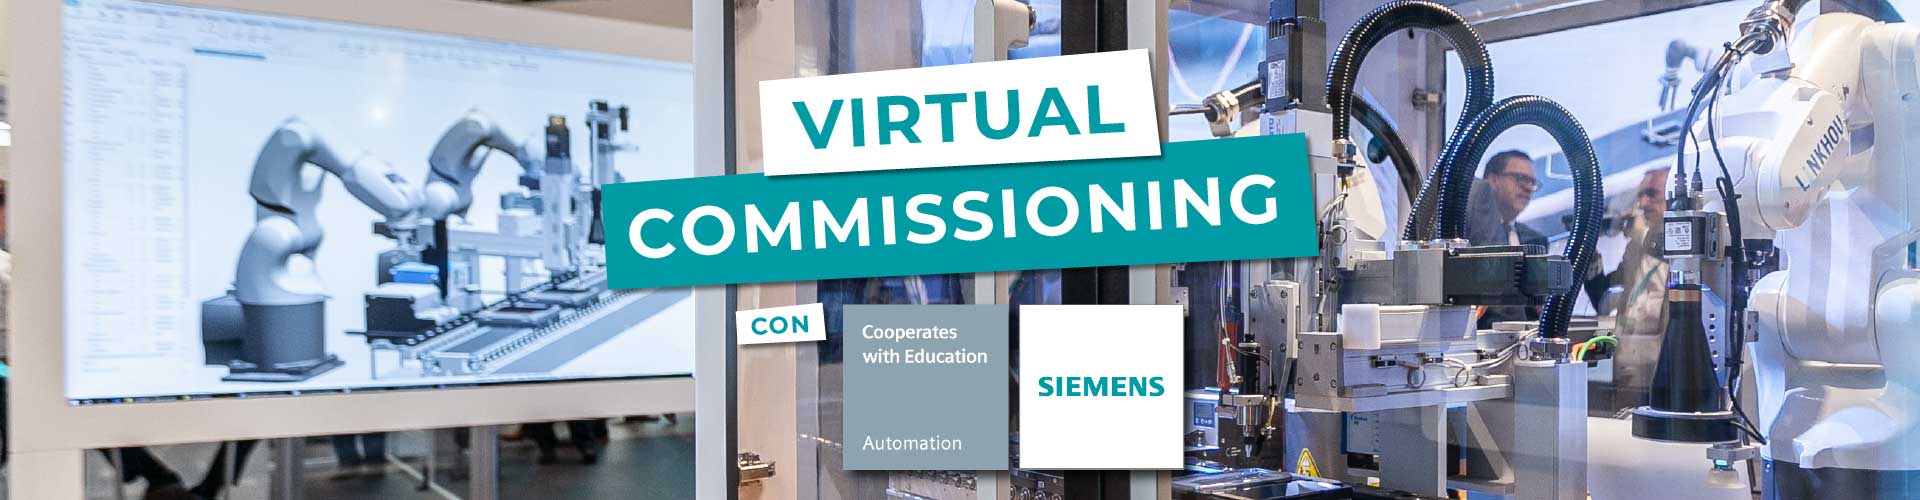 Virtual commissioning con Siemens